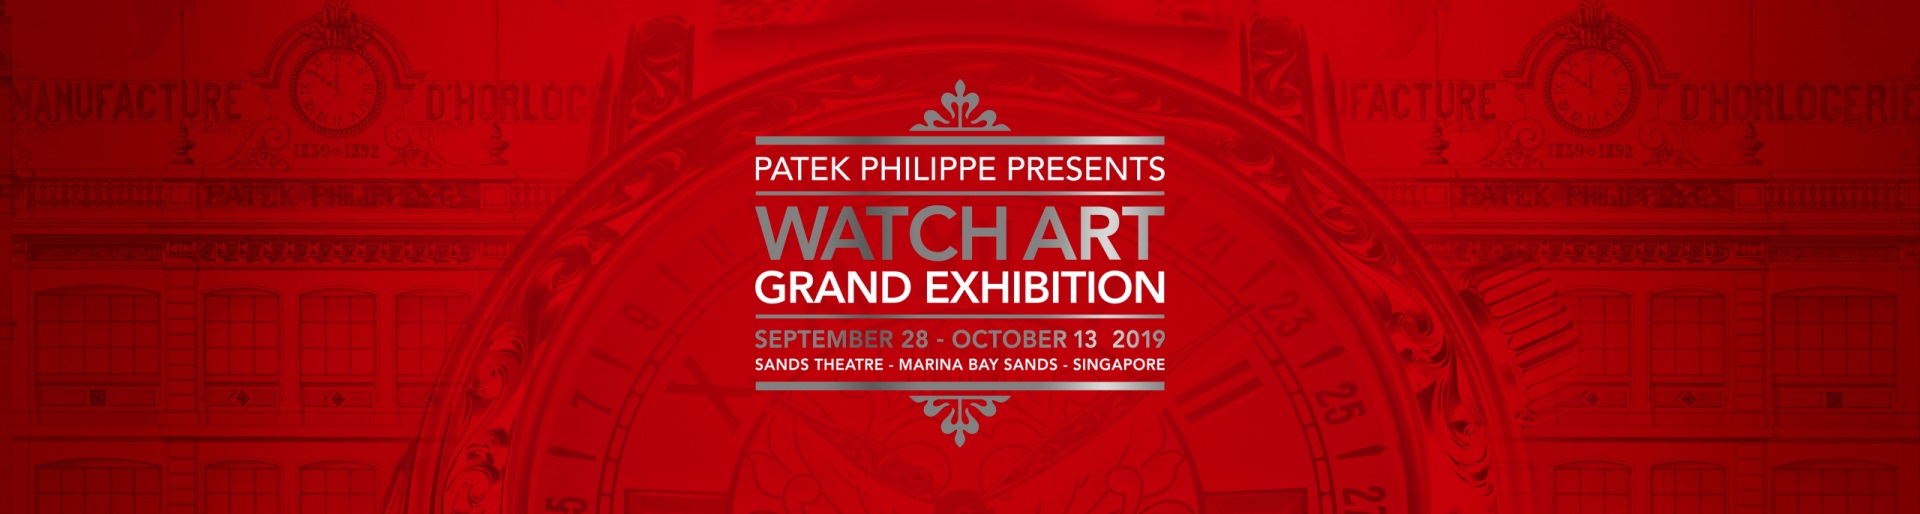 Watch Art Grand Exhibition Singapore 2019